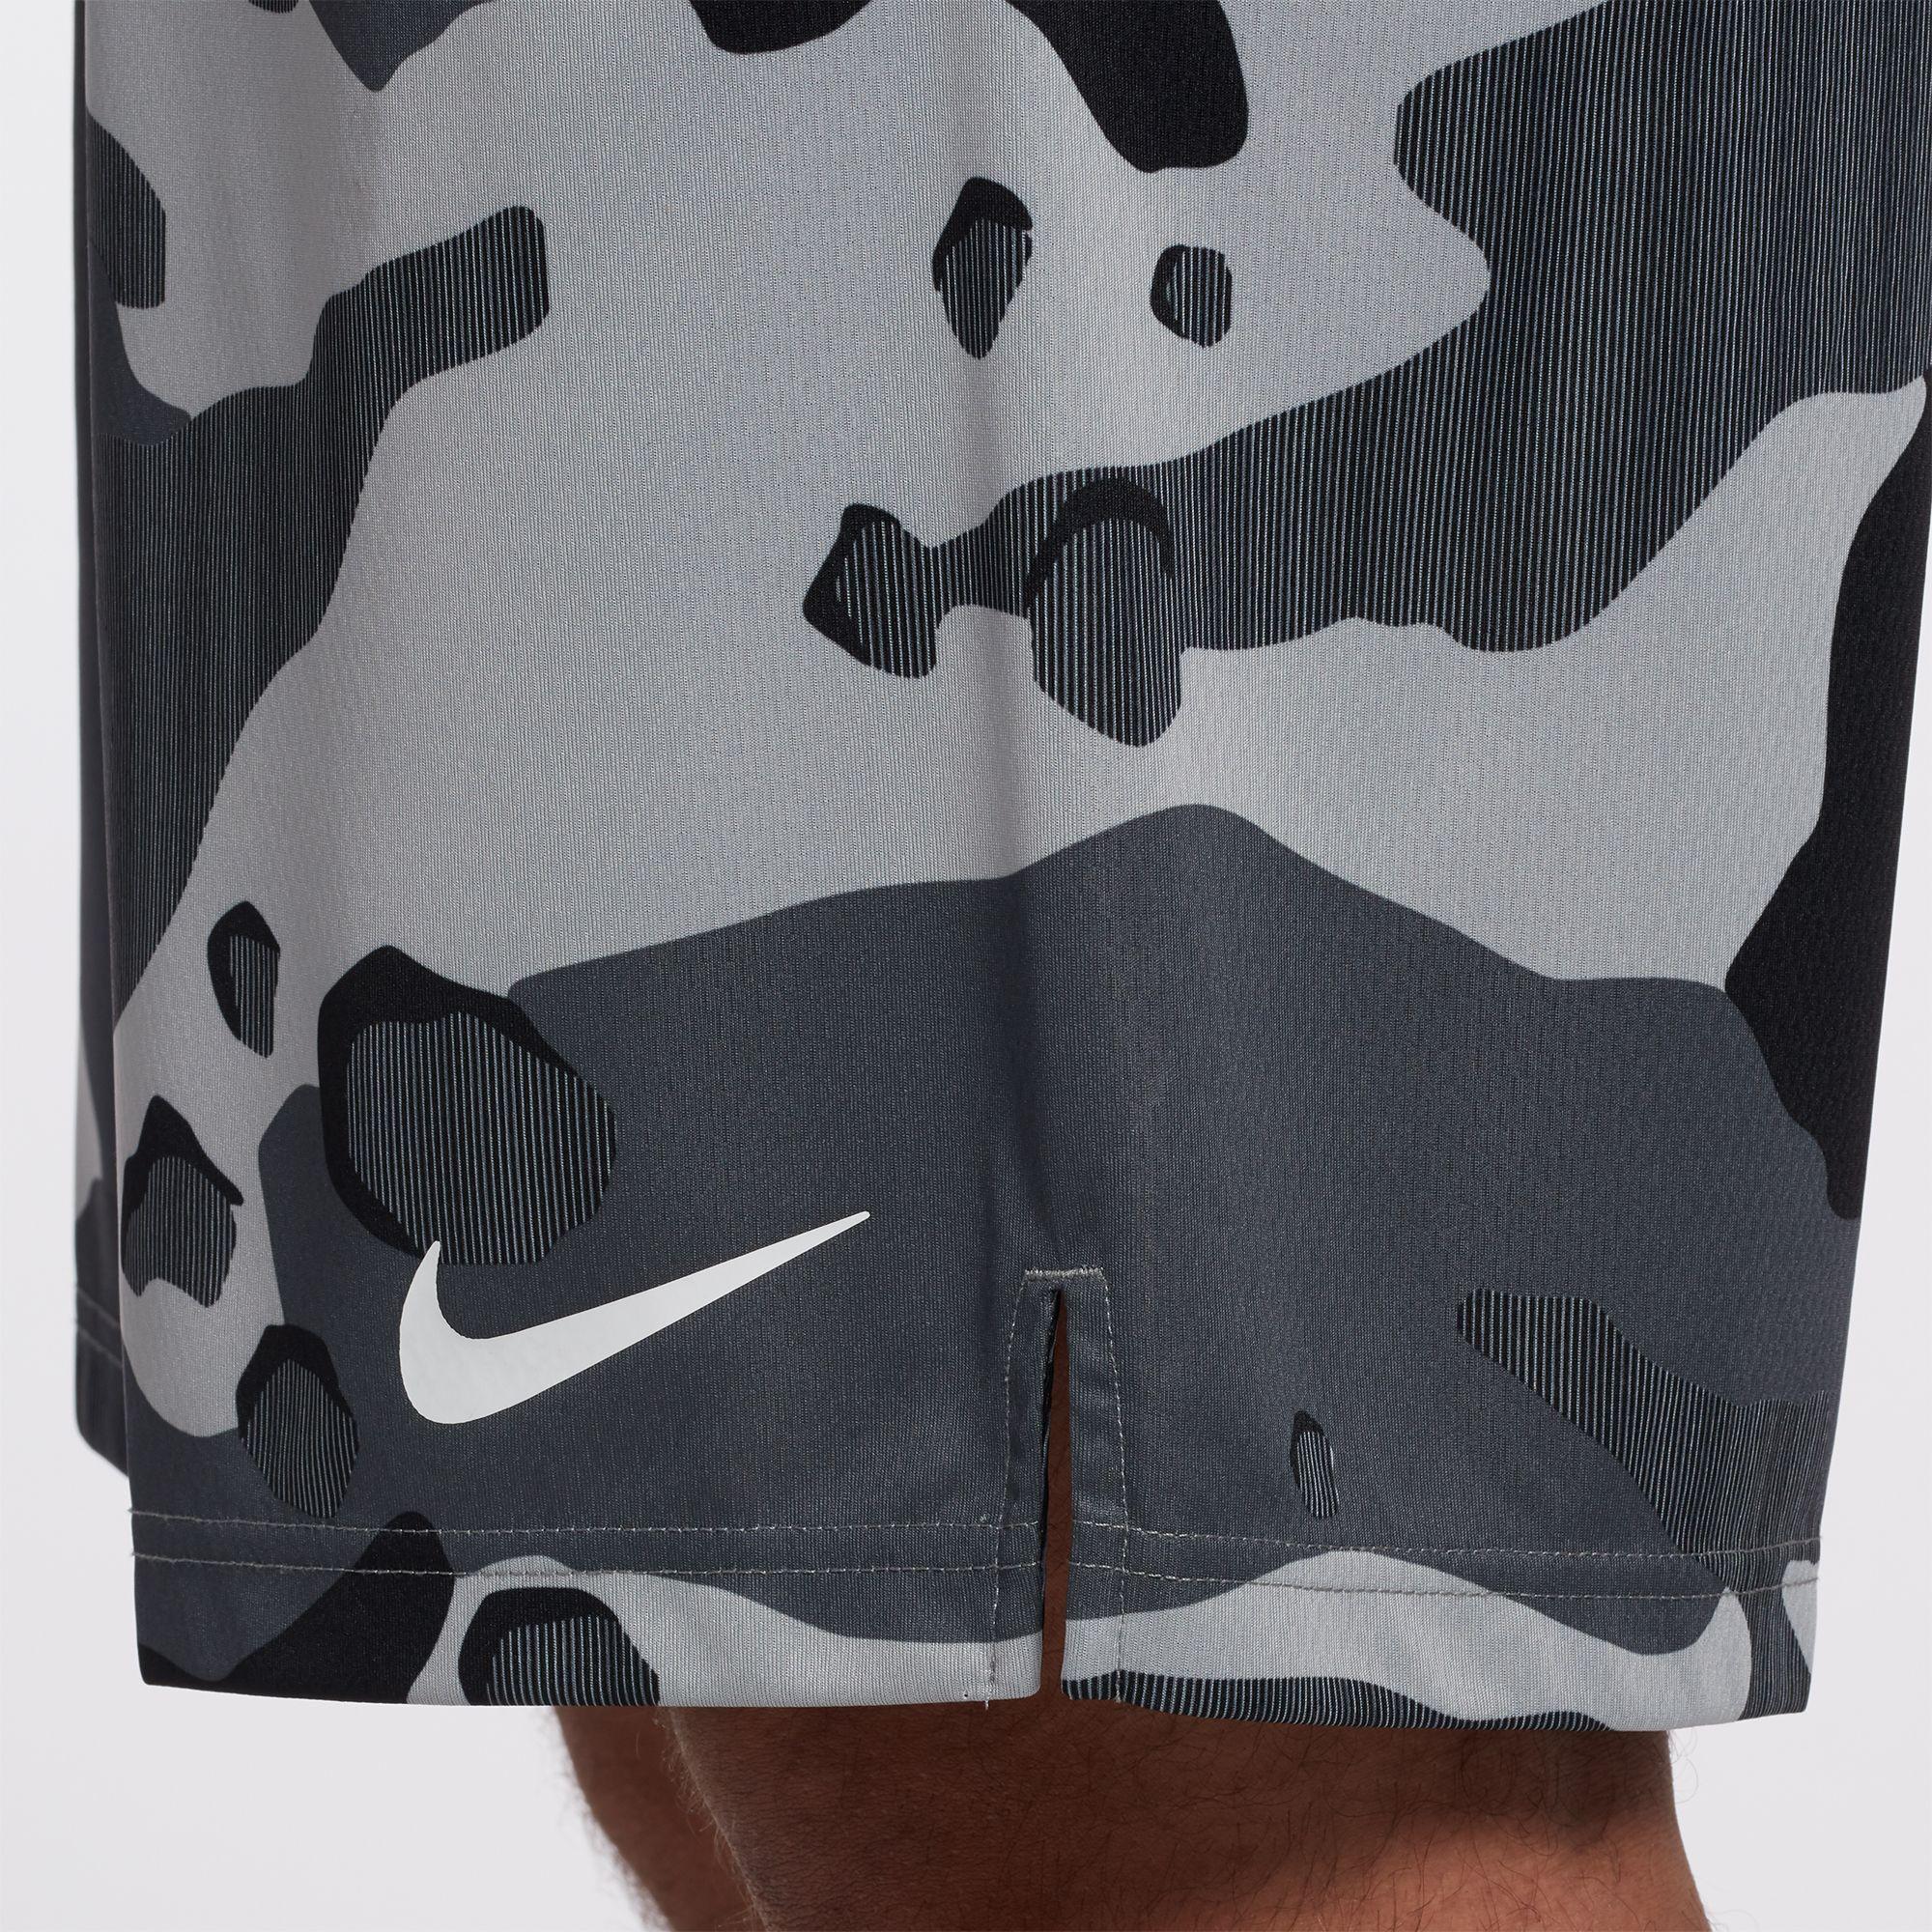 Nike Dri-fit Camo Training Shorts in lt/Smoke/Grey/White (Gray) for Men ...